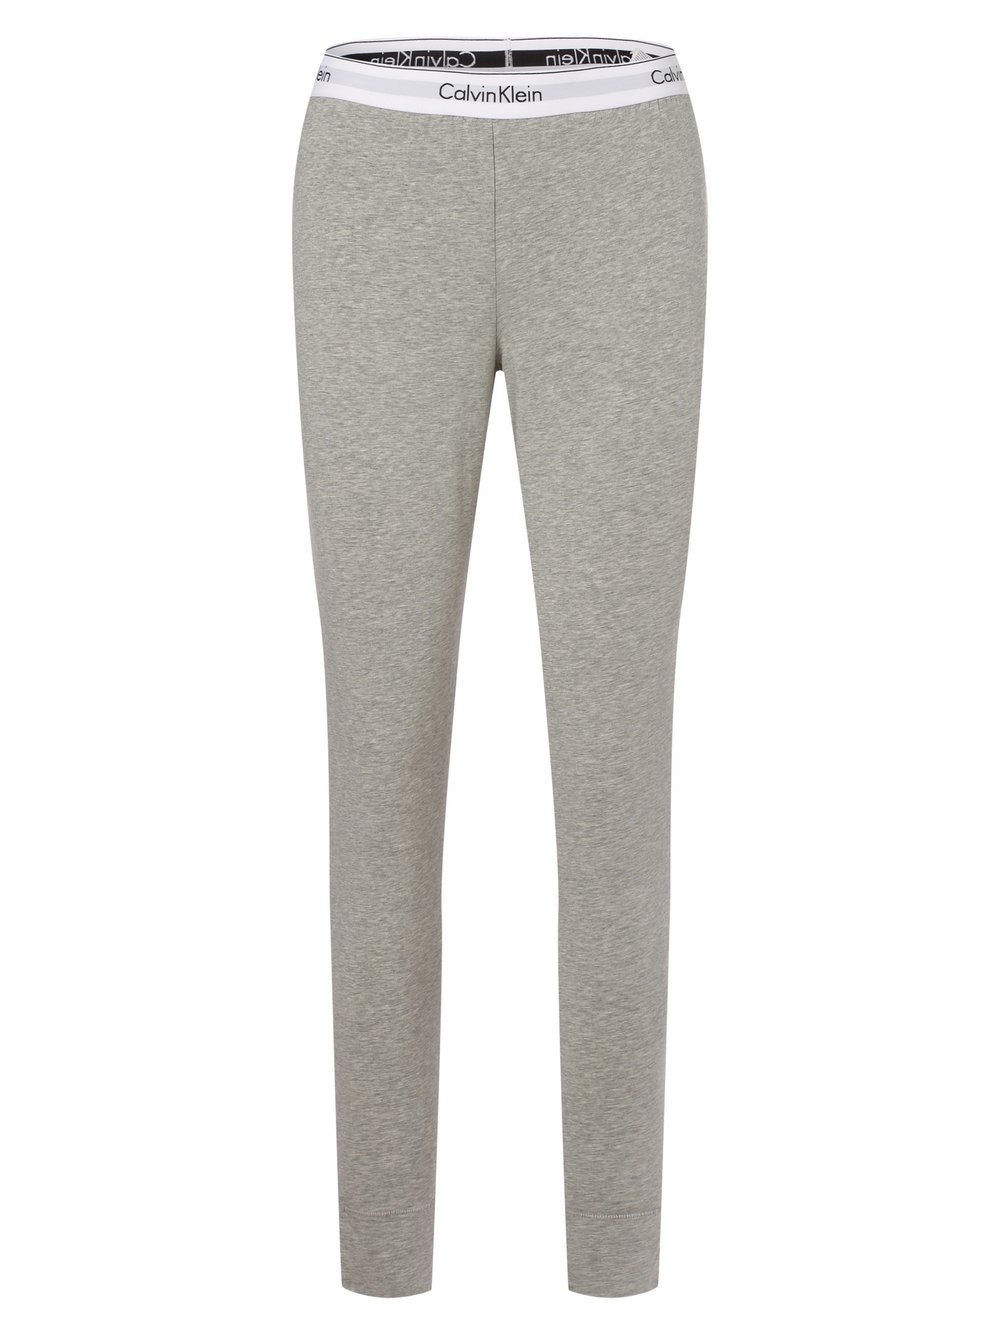 Calvin Klein - Damskie spodnie od piżamy, szary